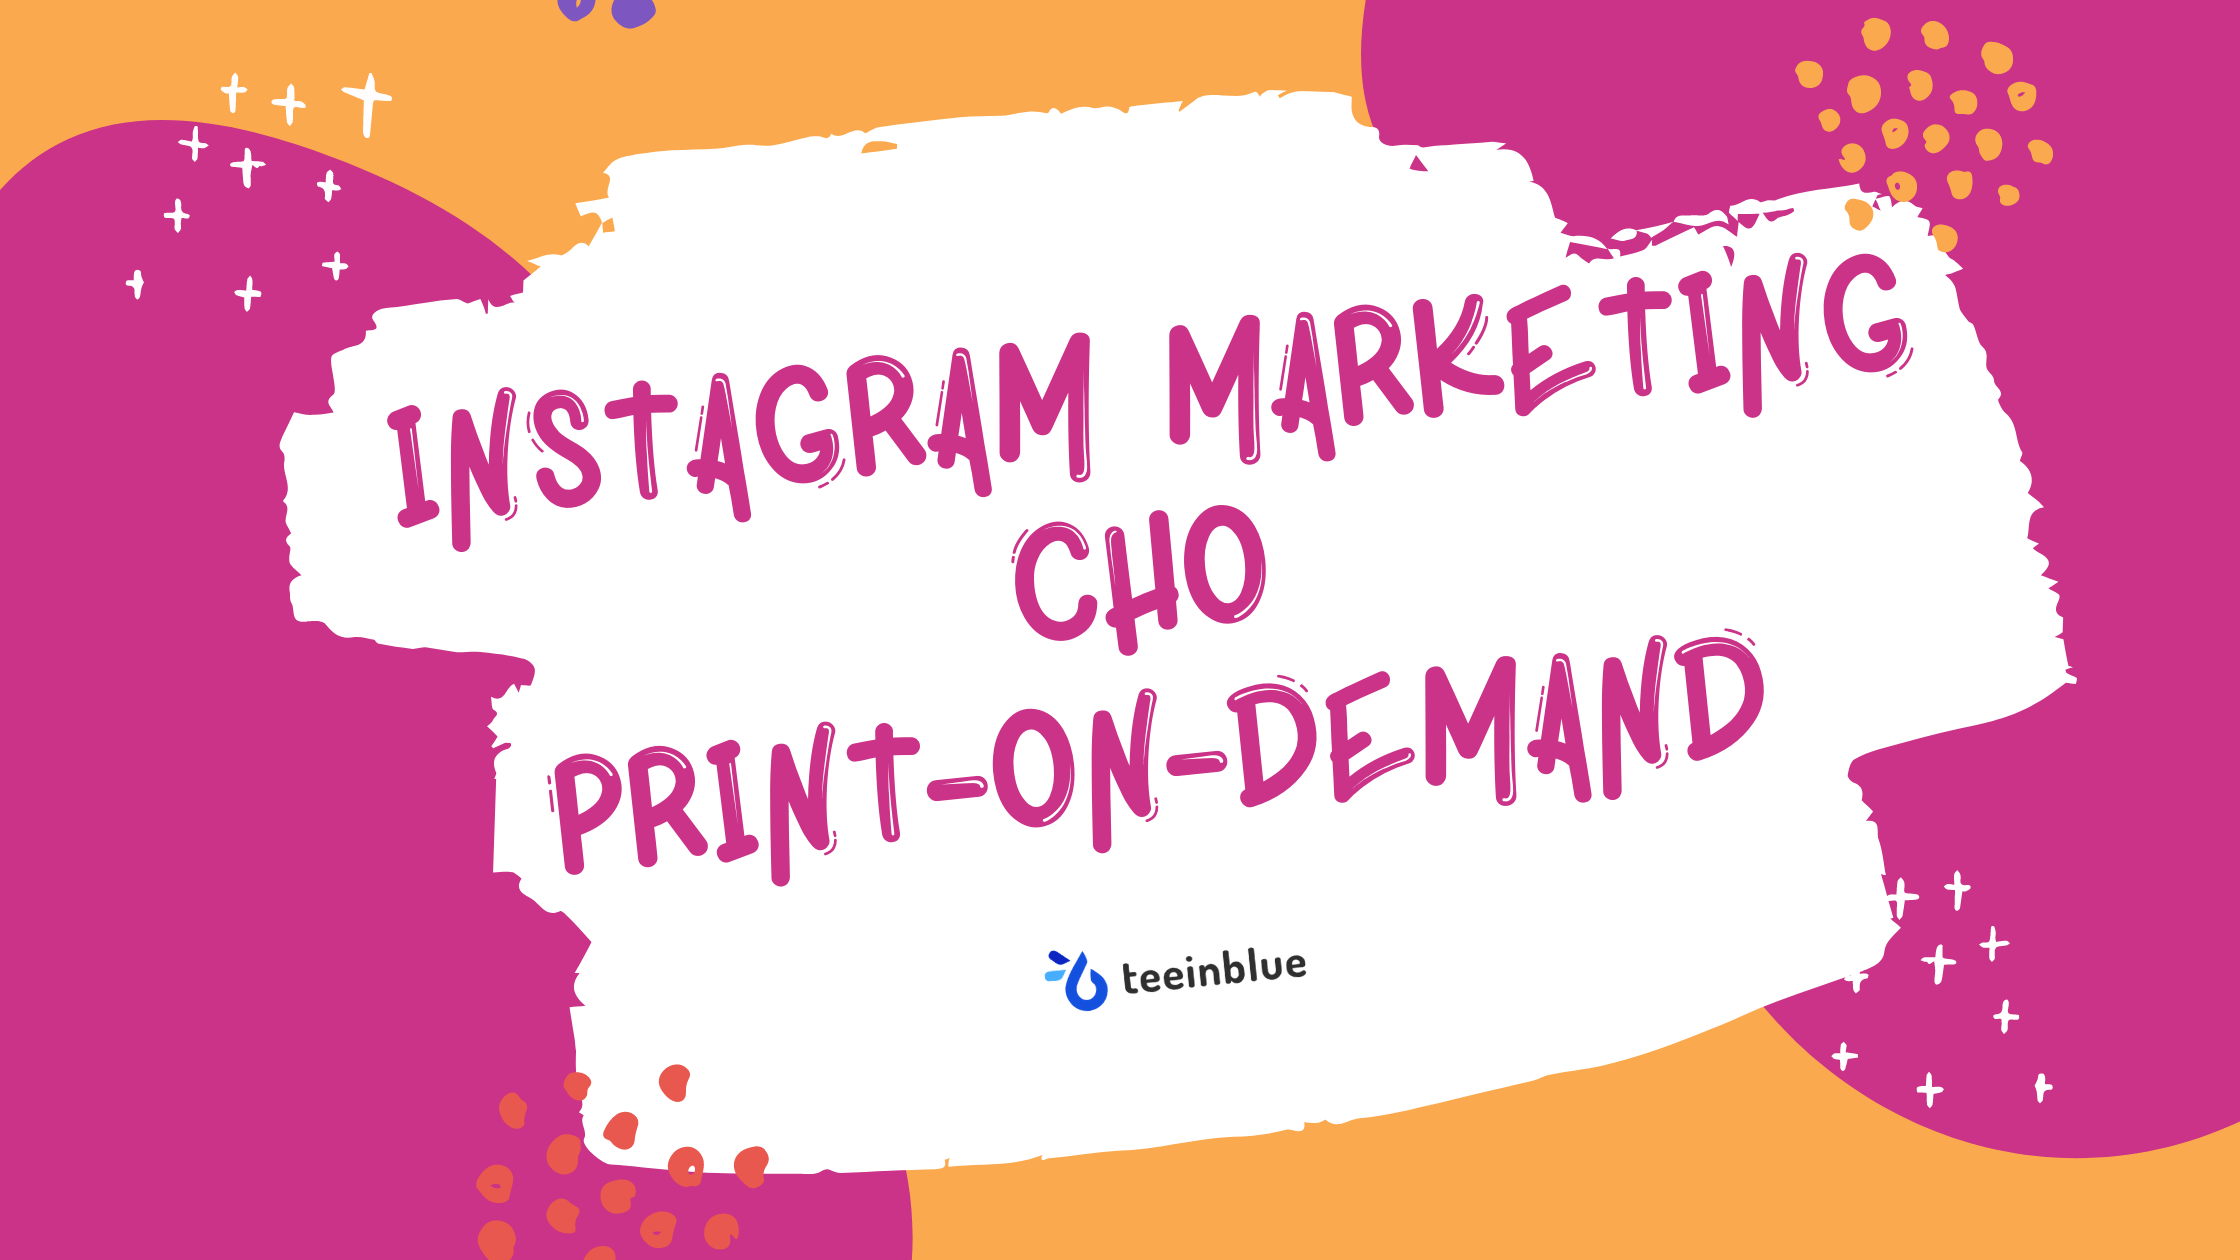 Instagram Marketing cho Print on demand